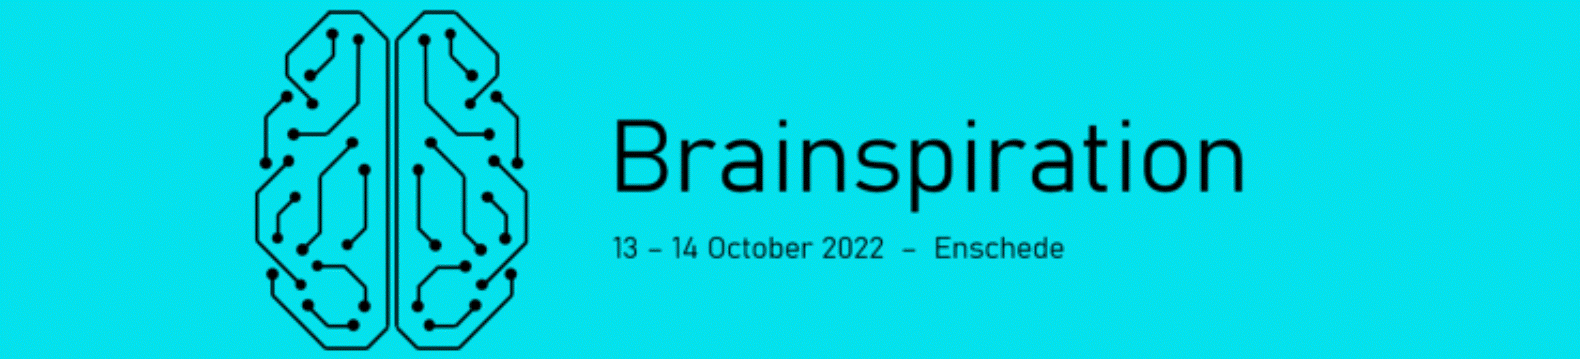 Brainspiration 2022